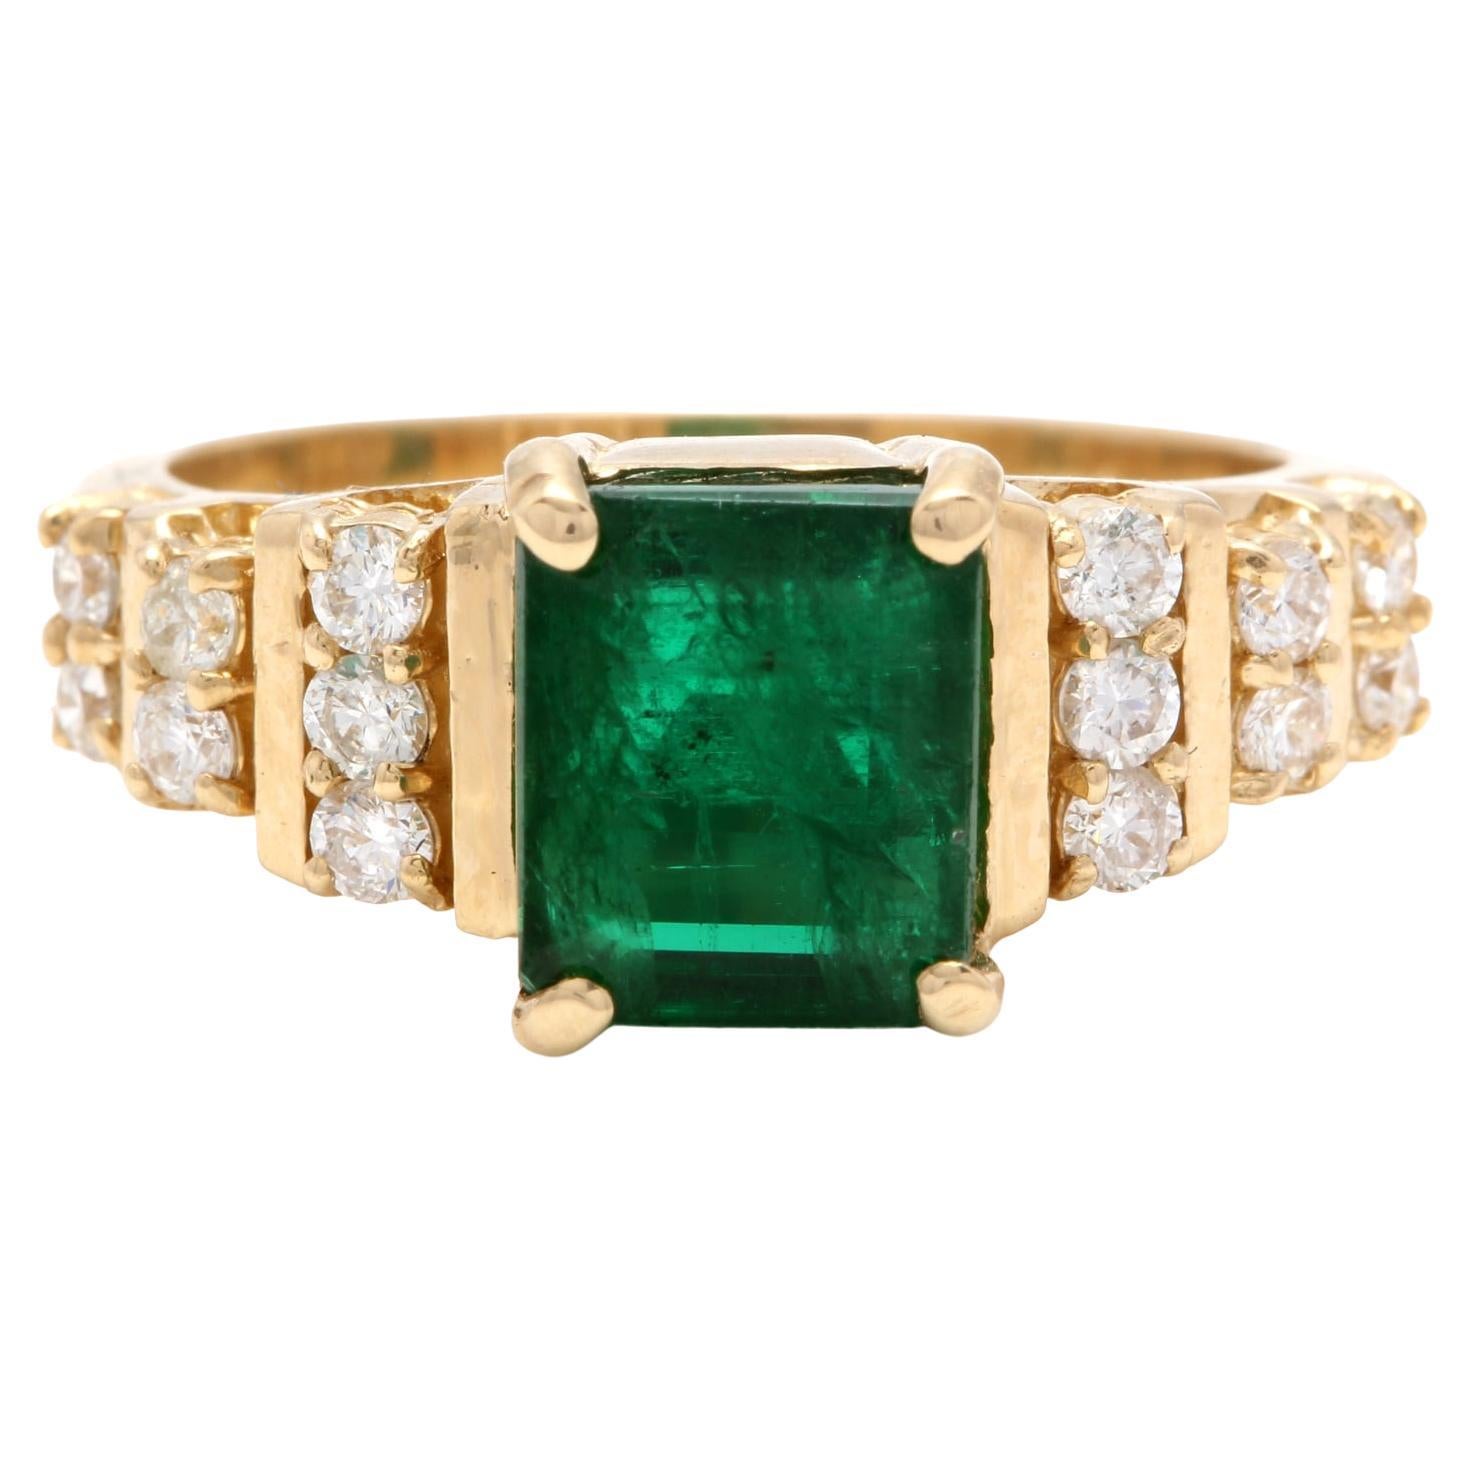 2.05 Carats Natural Emerald and Diamond 14K Solid Yellow Gold Ring